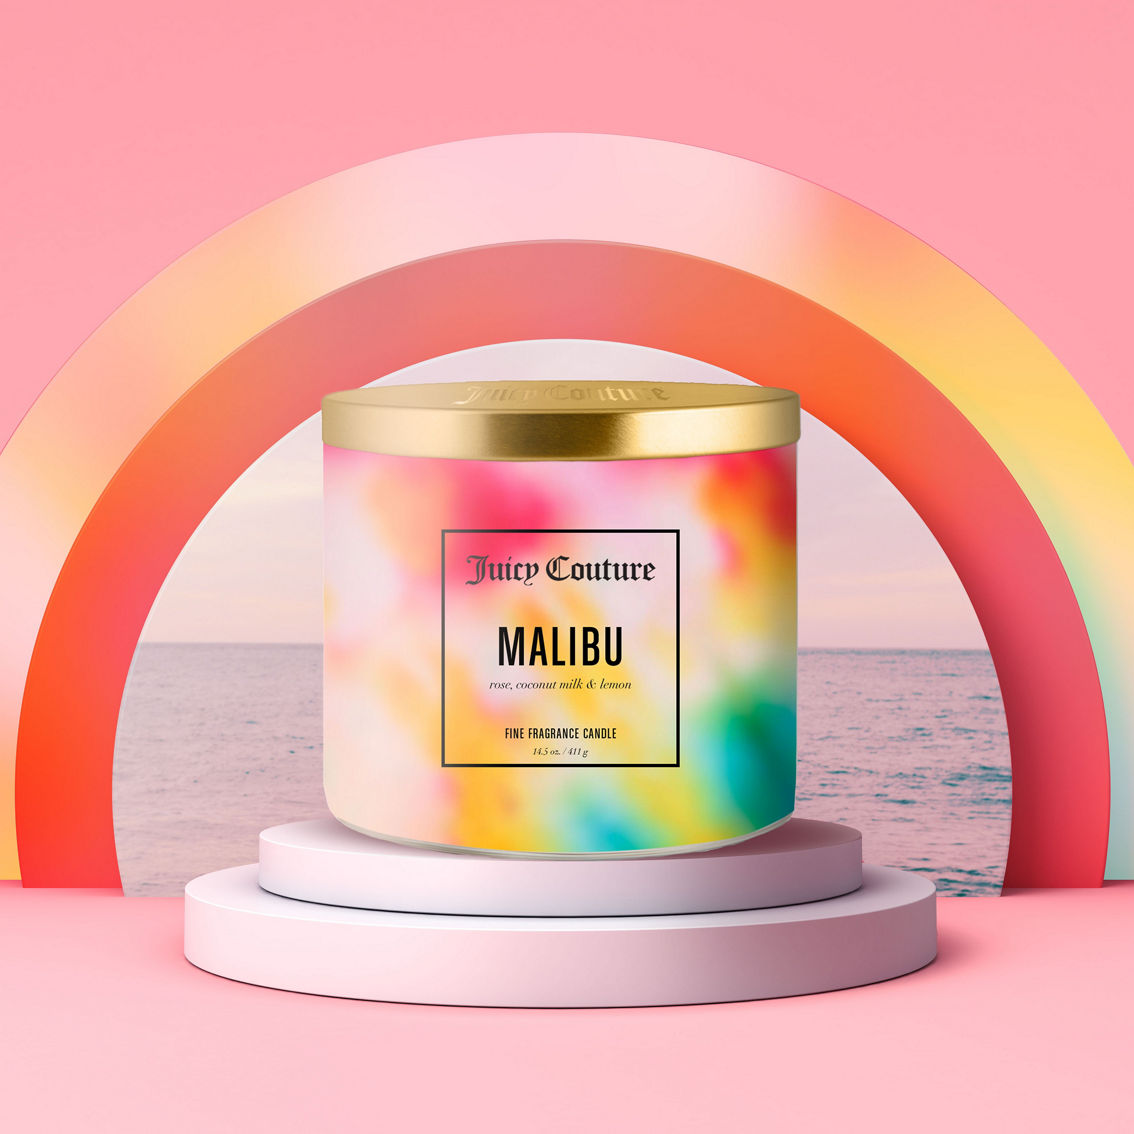 Juicy Couture Malibu Candle - Image 3 of 4